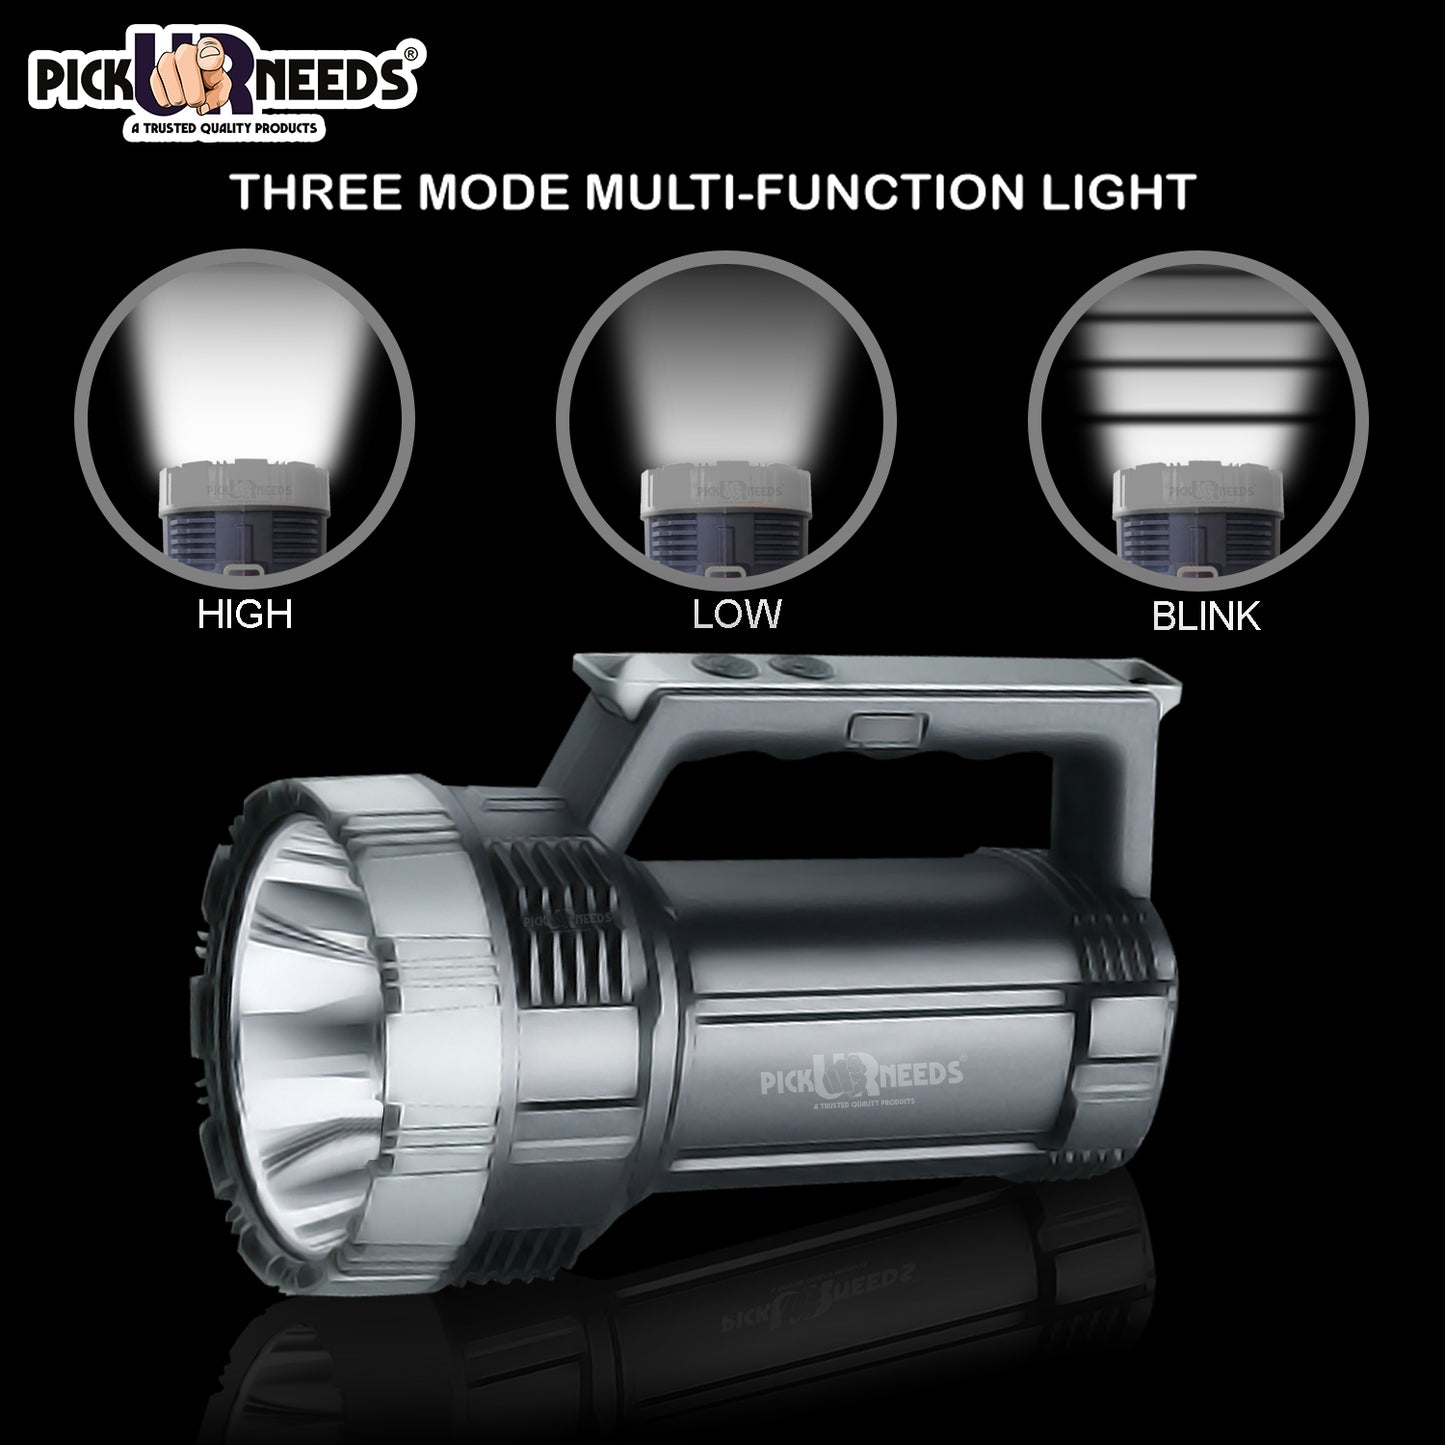 Pick Ur Needs Emergency Rechargeable100w Bright Waterproof LED Torch Laser Long Range Power Search Light